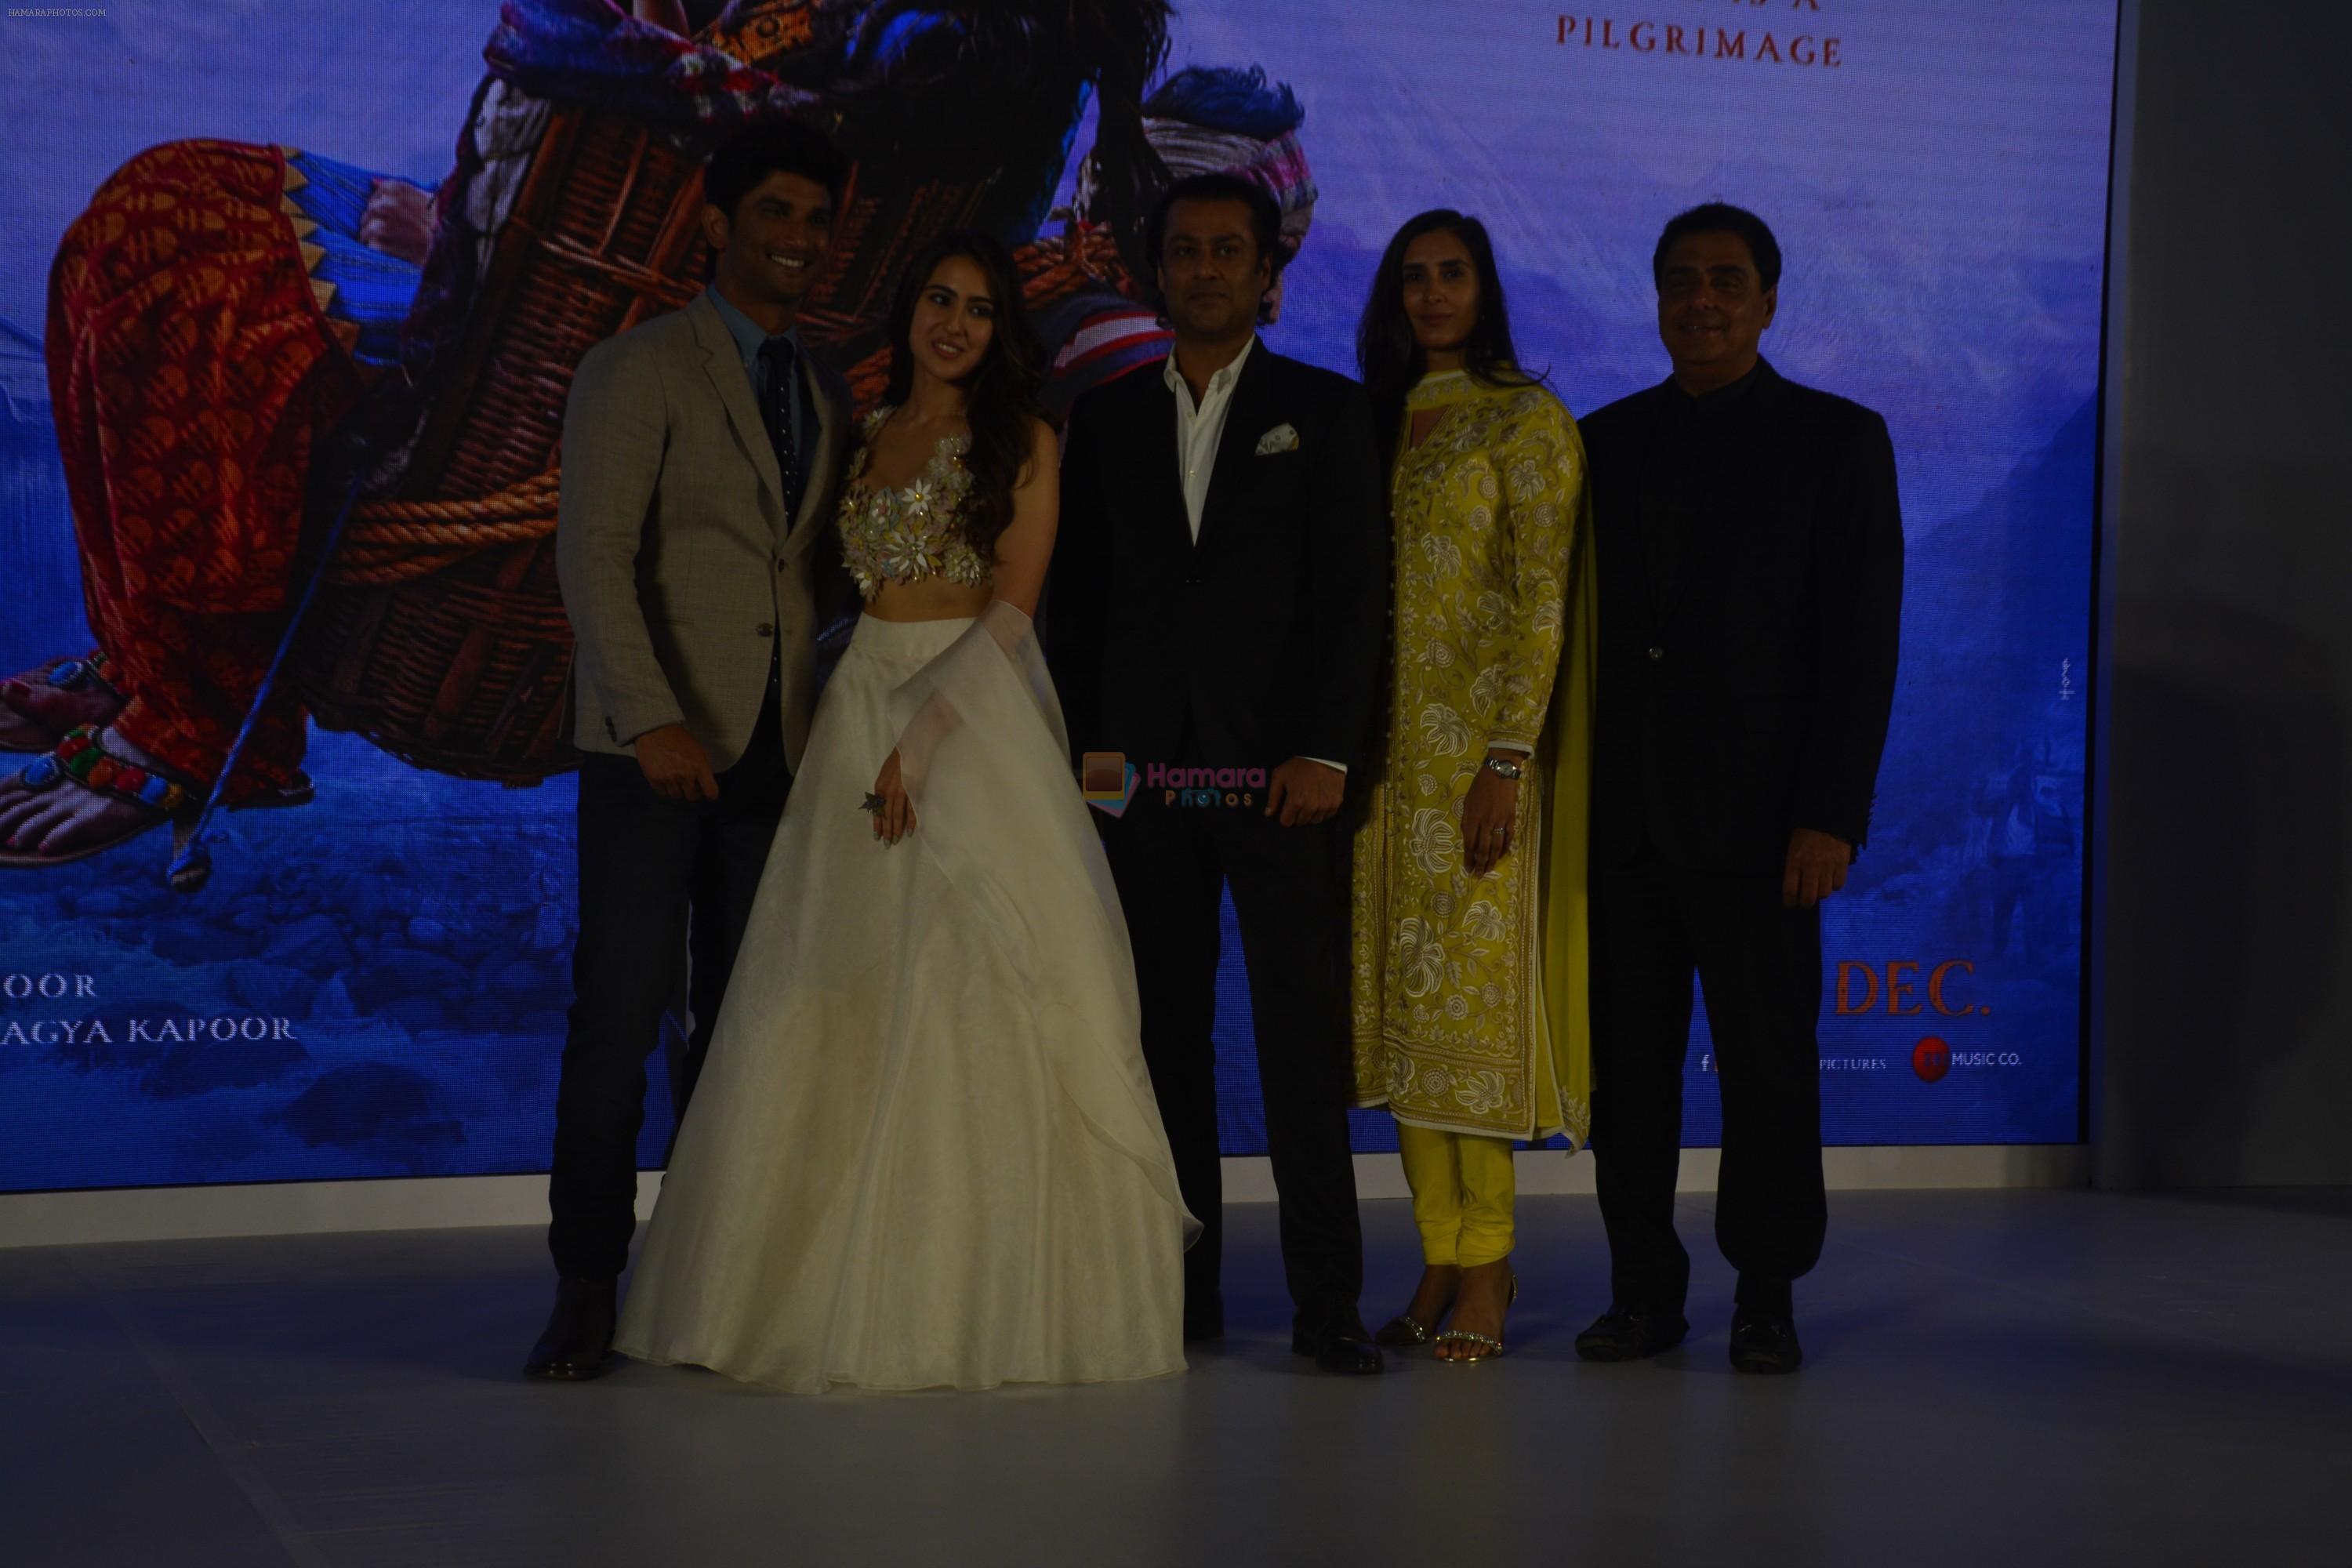 Sara Ali Khan, Sushant Singh Rajput, Abhishek Kapoor with his wife Pragya Yadav, Ronnie Screwvala at the Trailer Launch Of Film Kedarnath on 12th Nov 2018